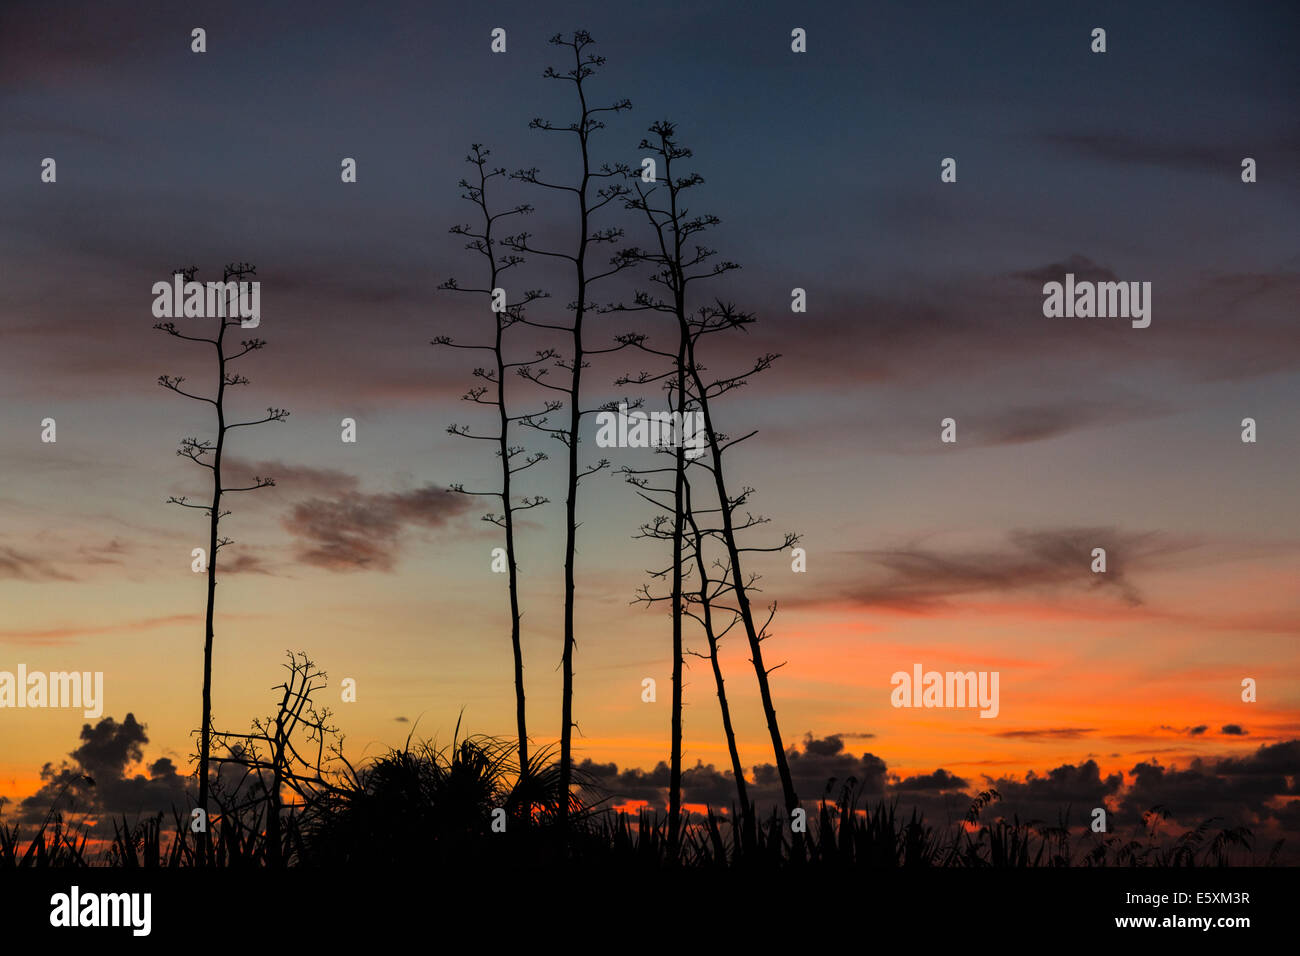 Tree silhouettes Stock Photo